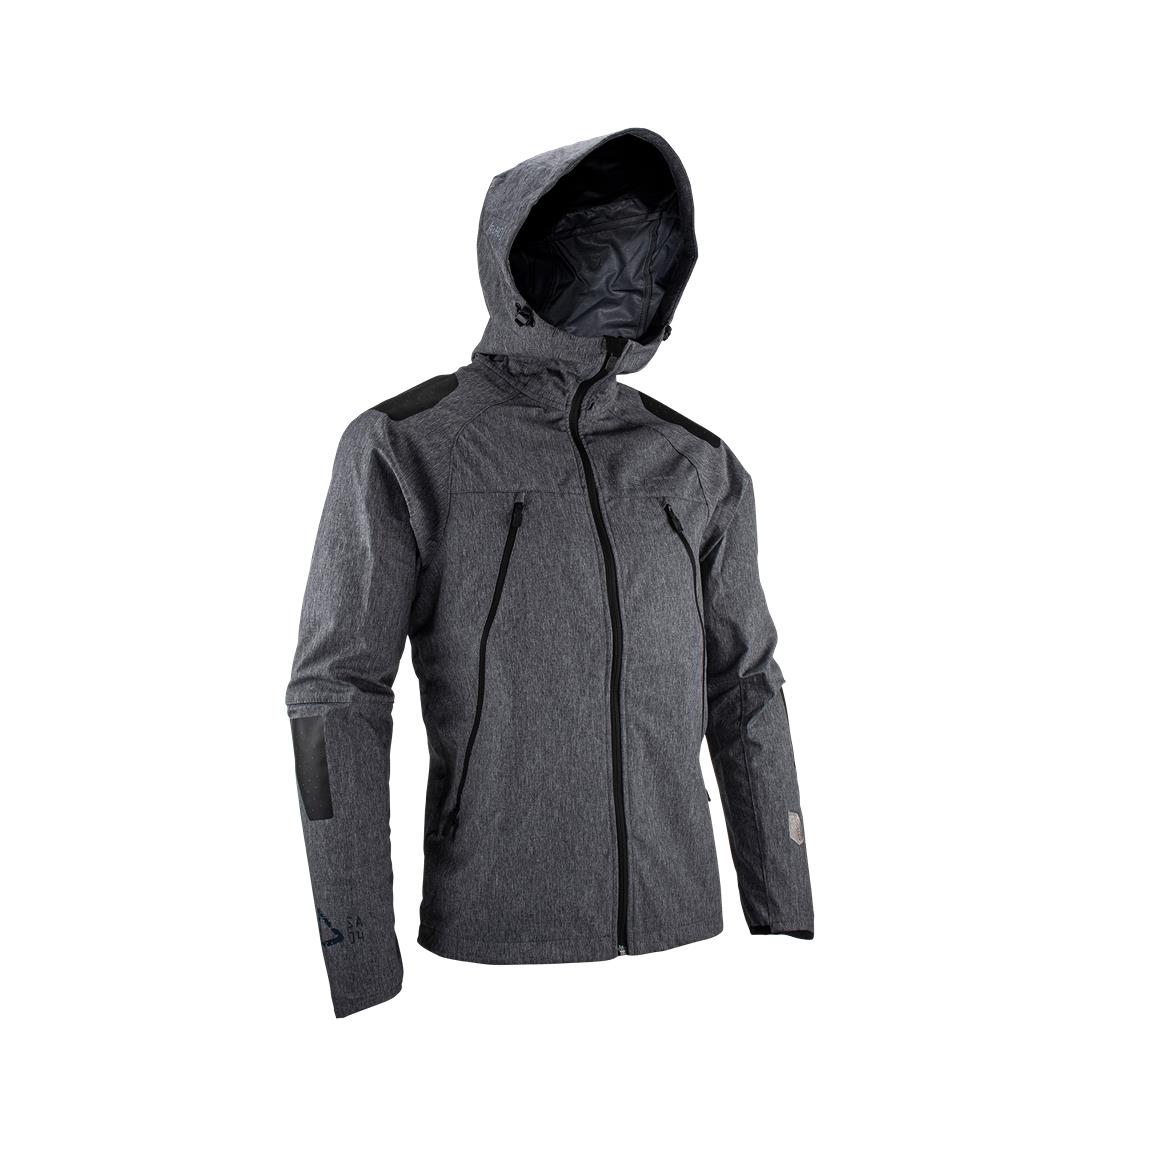 Mtb Hydradri 4.0 waterproof jacket Black size XS